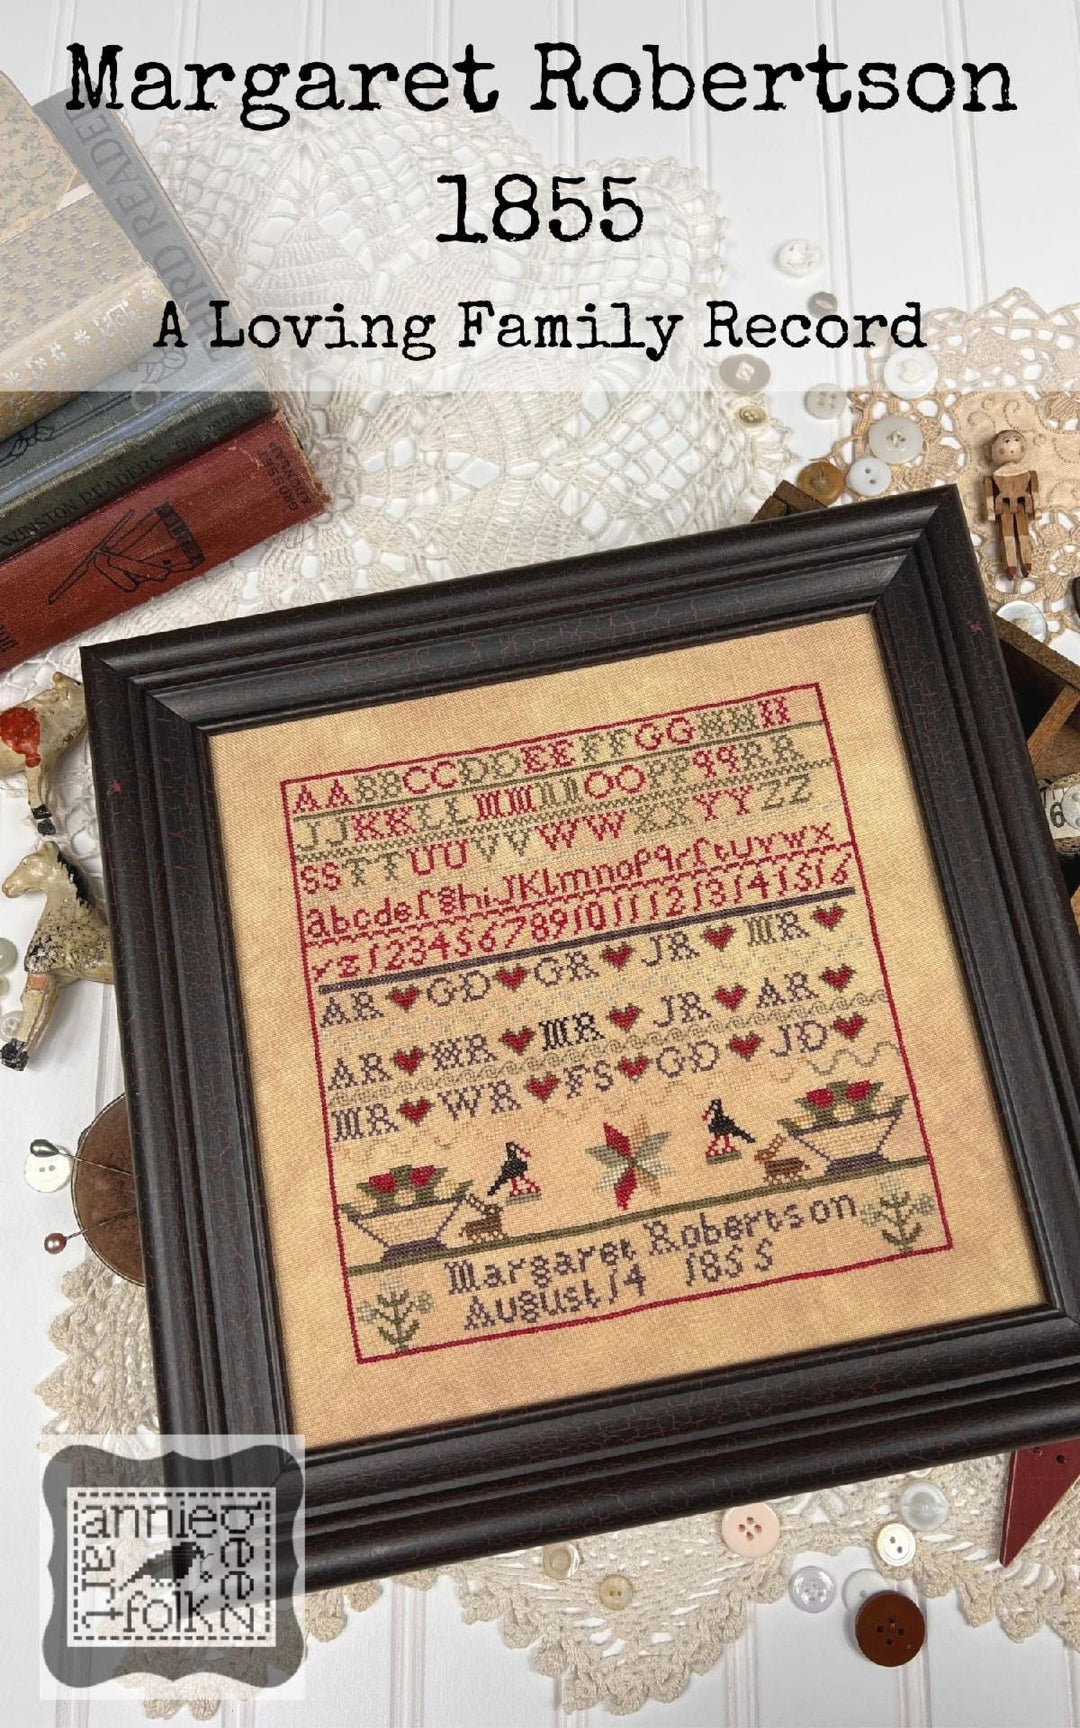 Margaret Robertson 1855 - A Loving Family Record | Annie Beez Folk Art